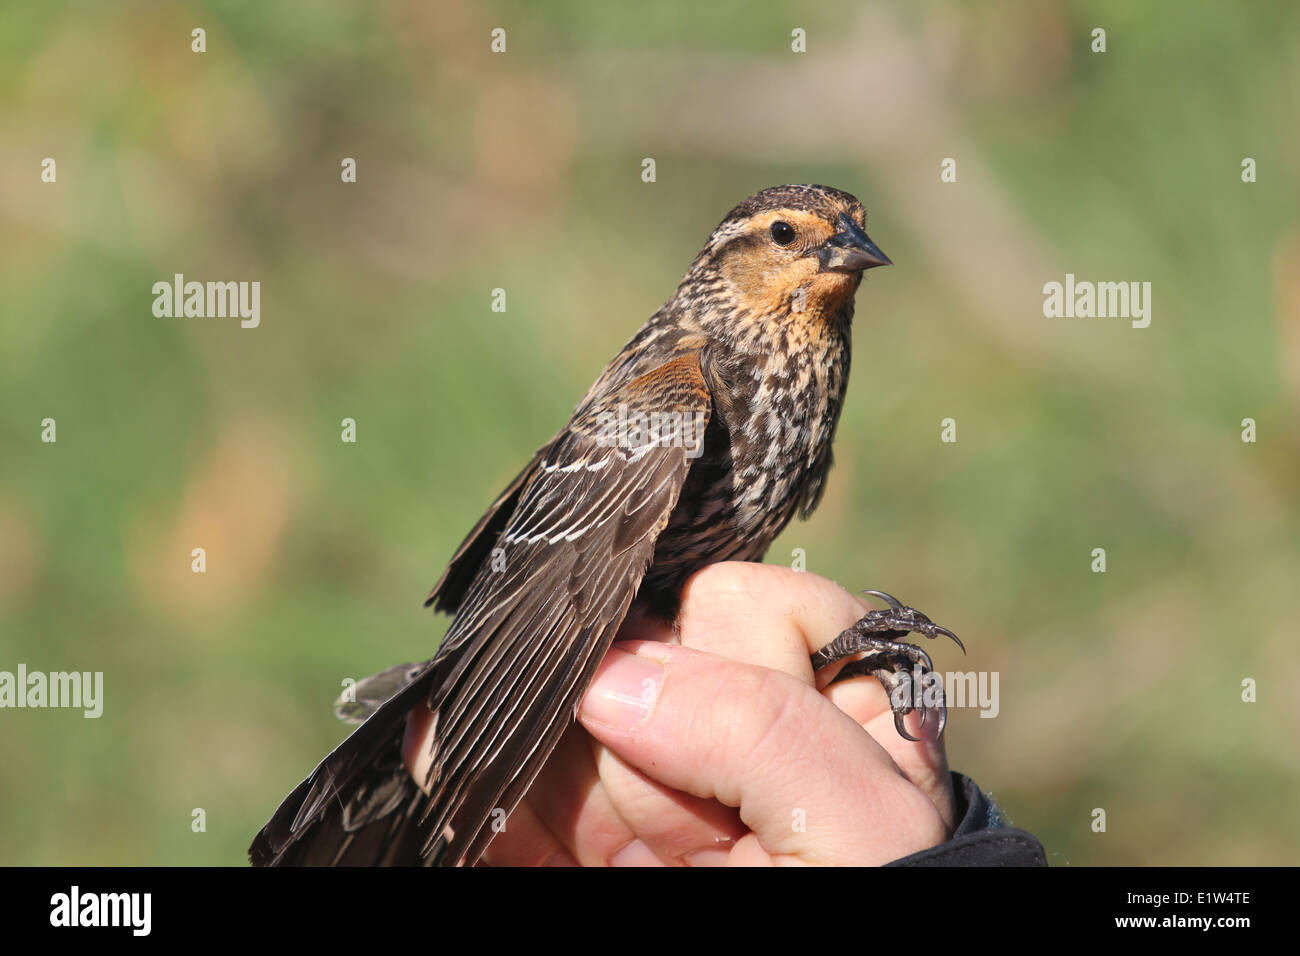 Juvenile or Female Red Wing Blackbird Stock Photo - Alamy